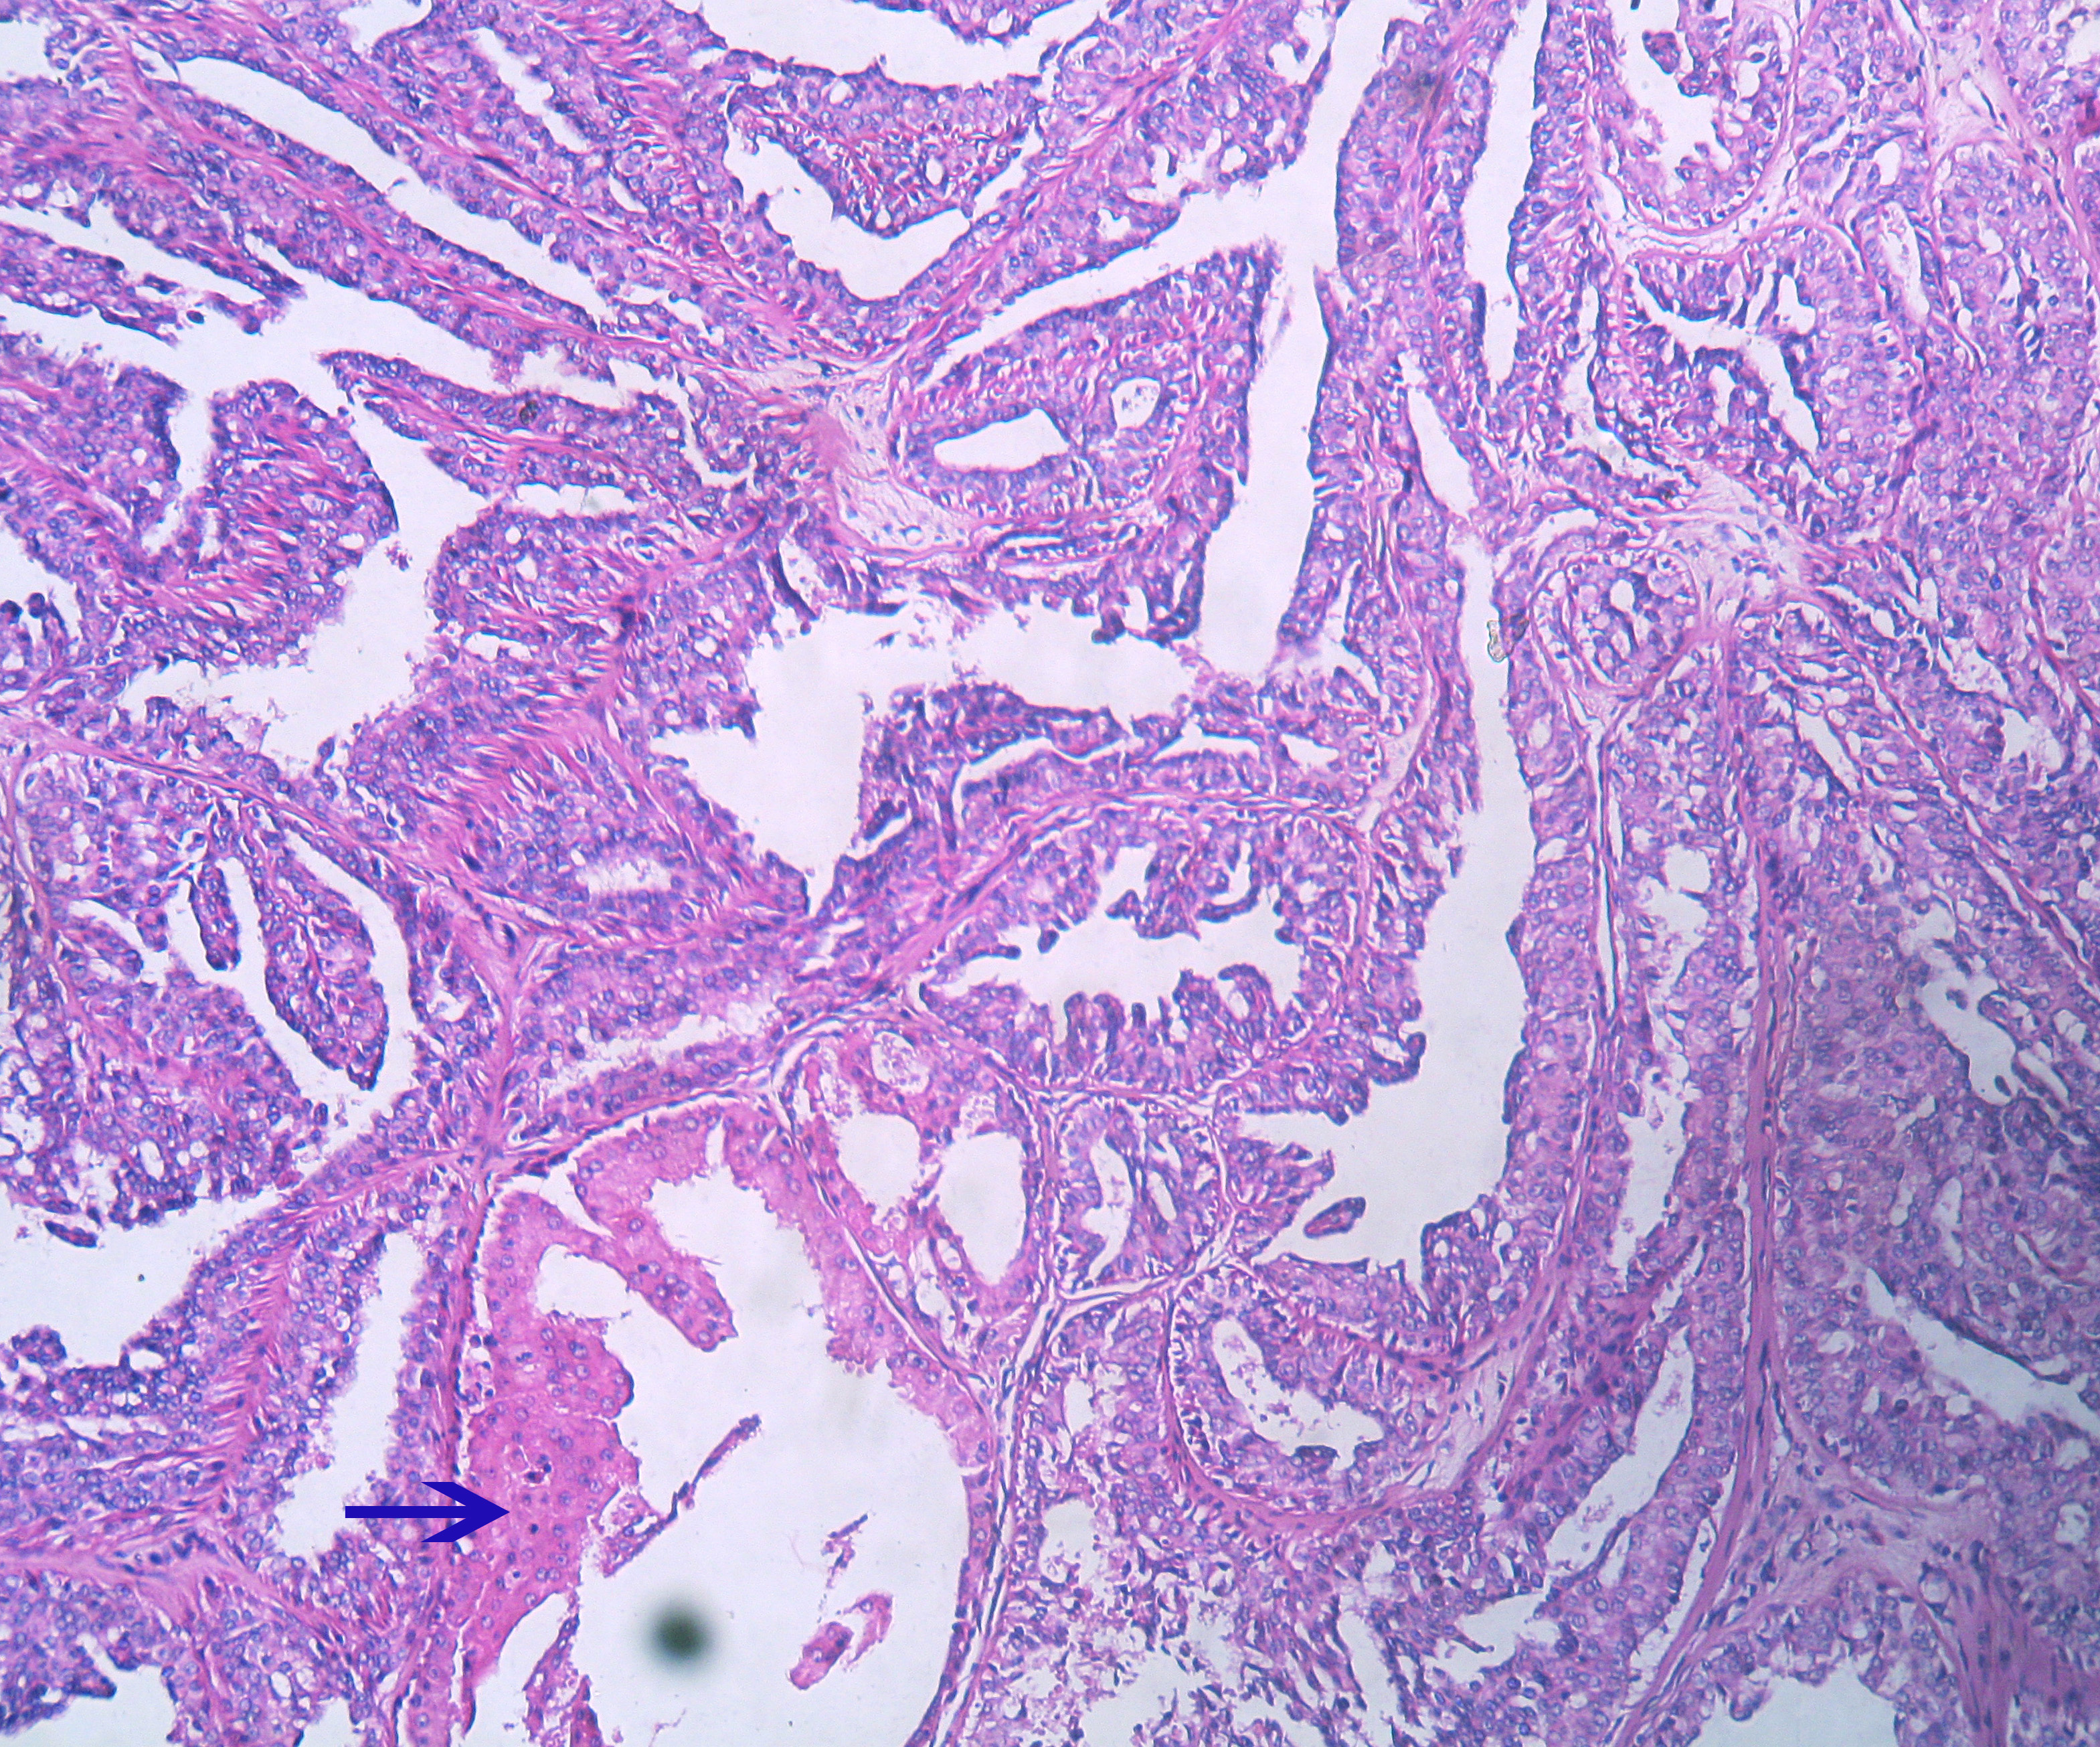 Papiloma intraductal com metaplasia apocrina